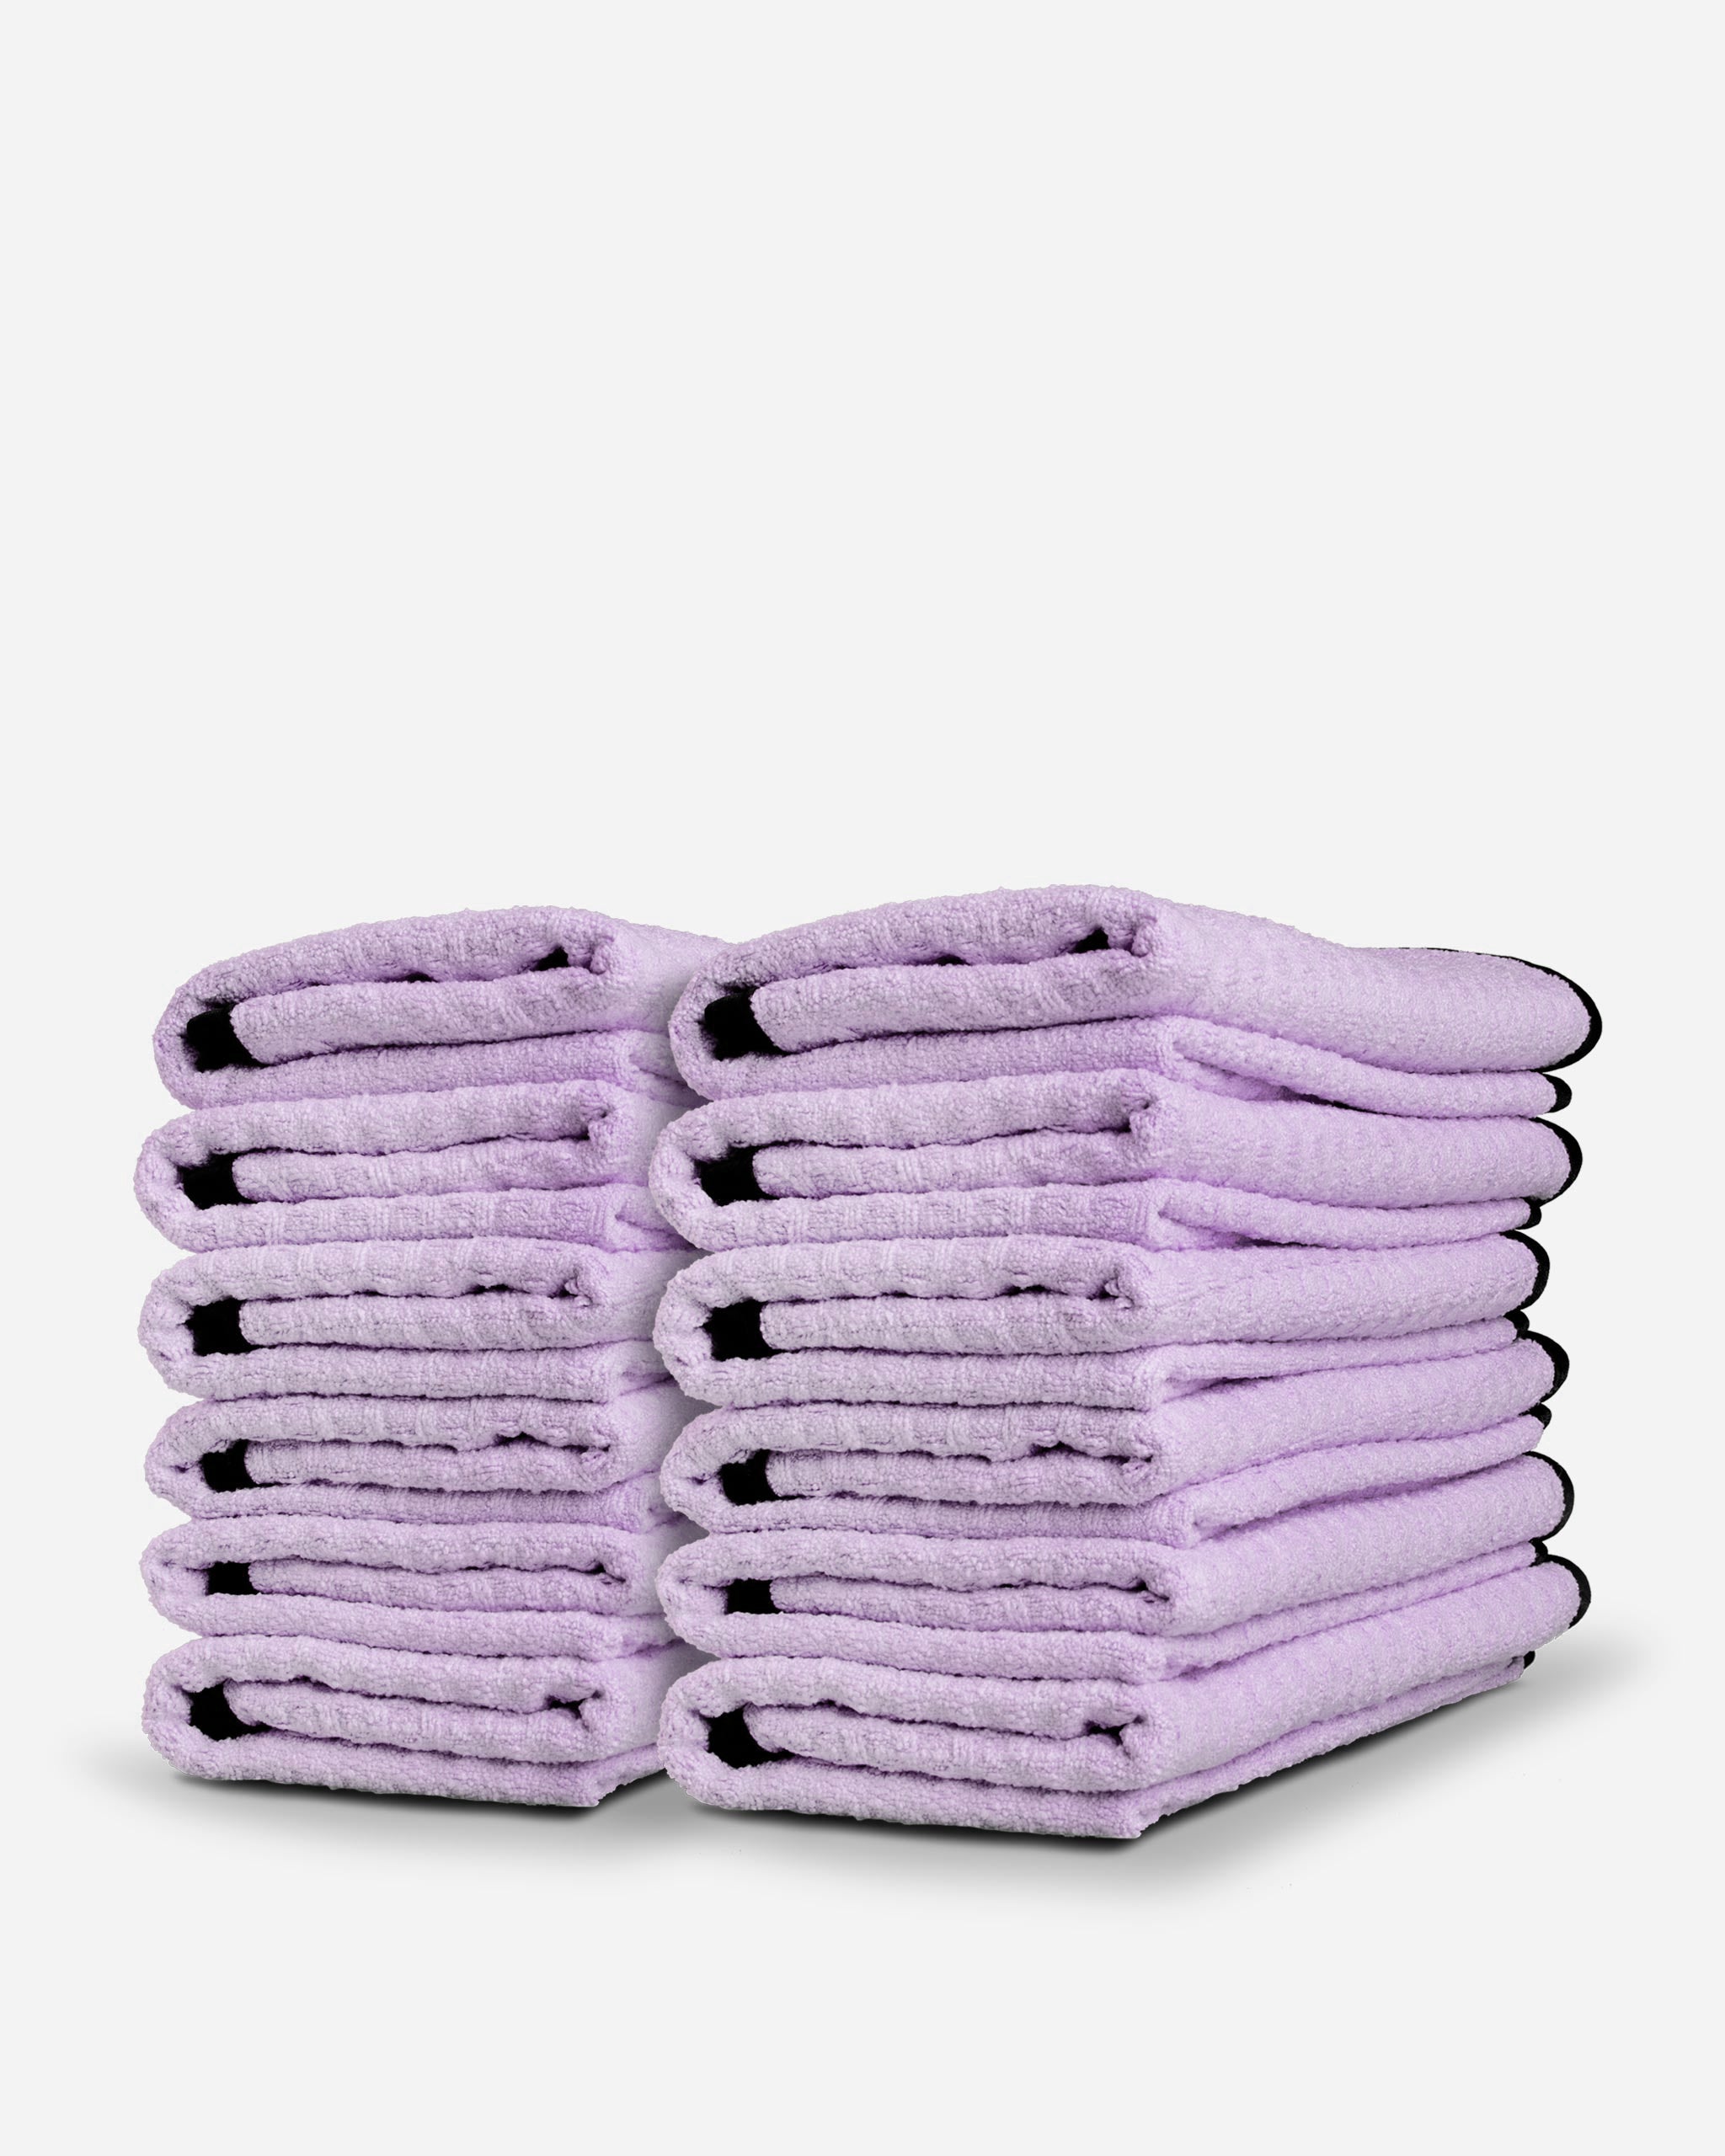 Adam's Microfiber Waterless Wash Towels